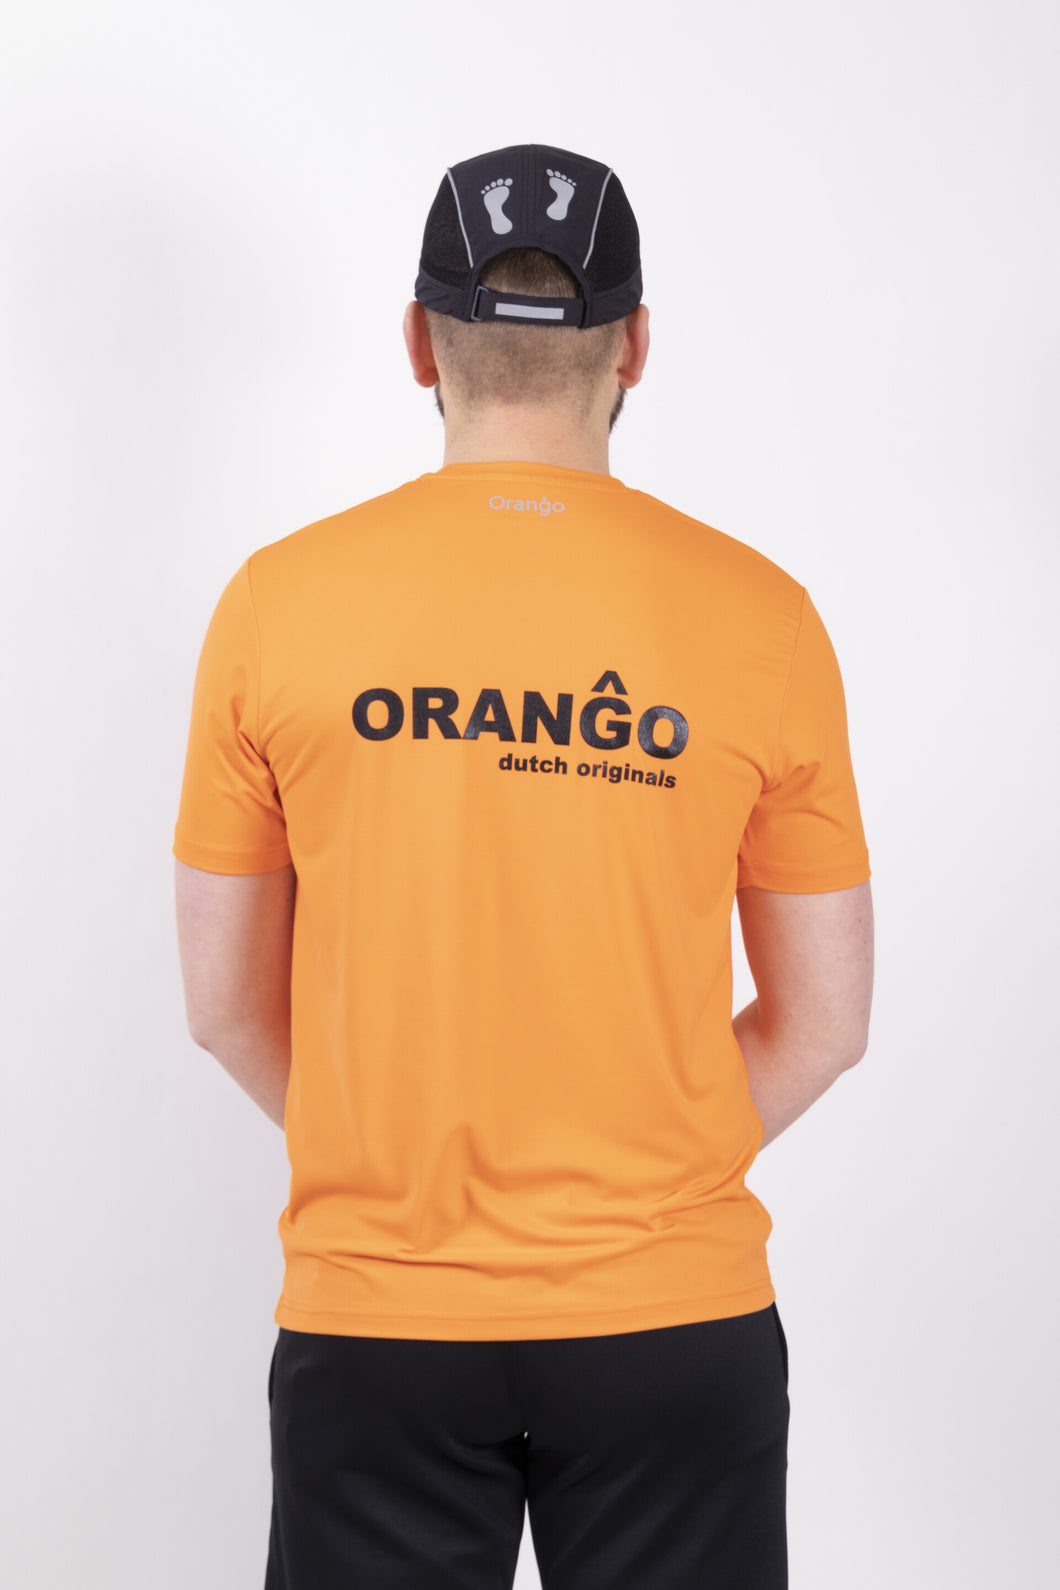 Orango Running - Mens T-shirt short sleeve O-neck - Print: Dutch originals - P010-101G